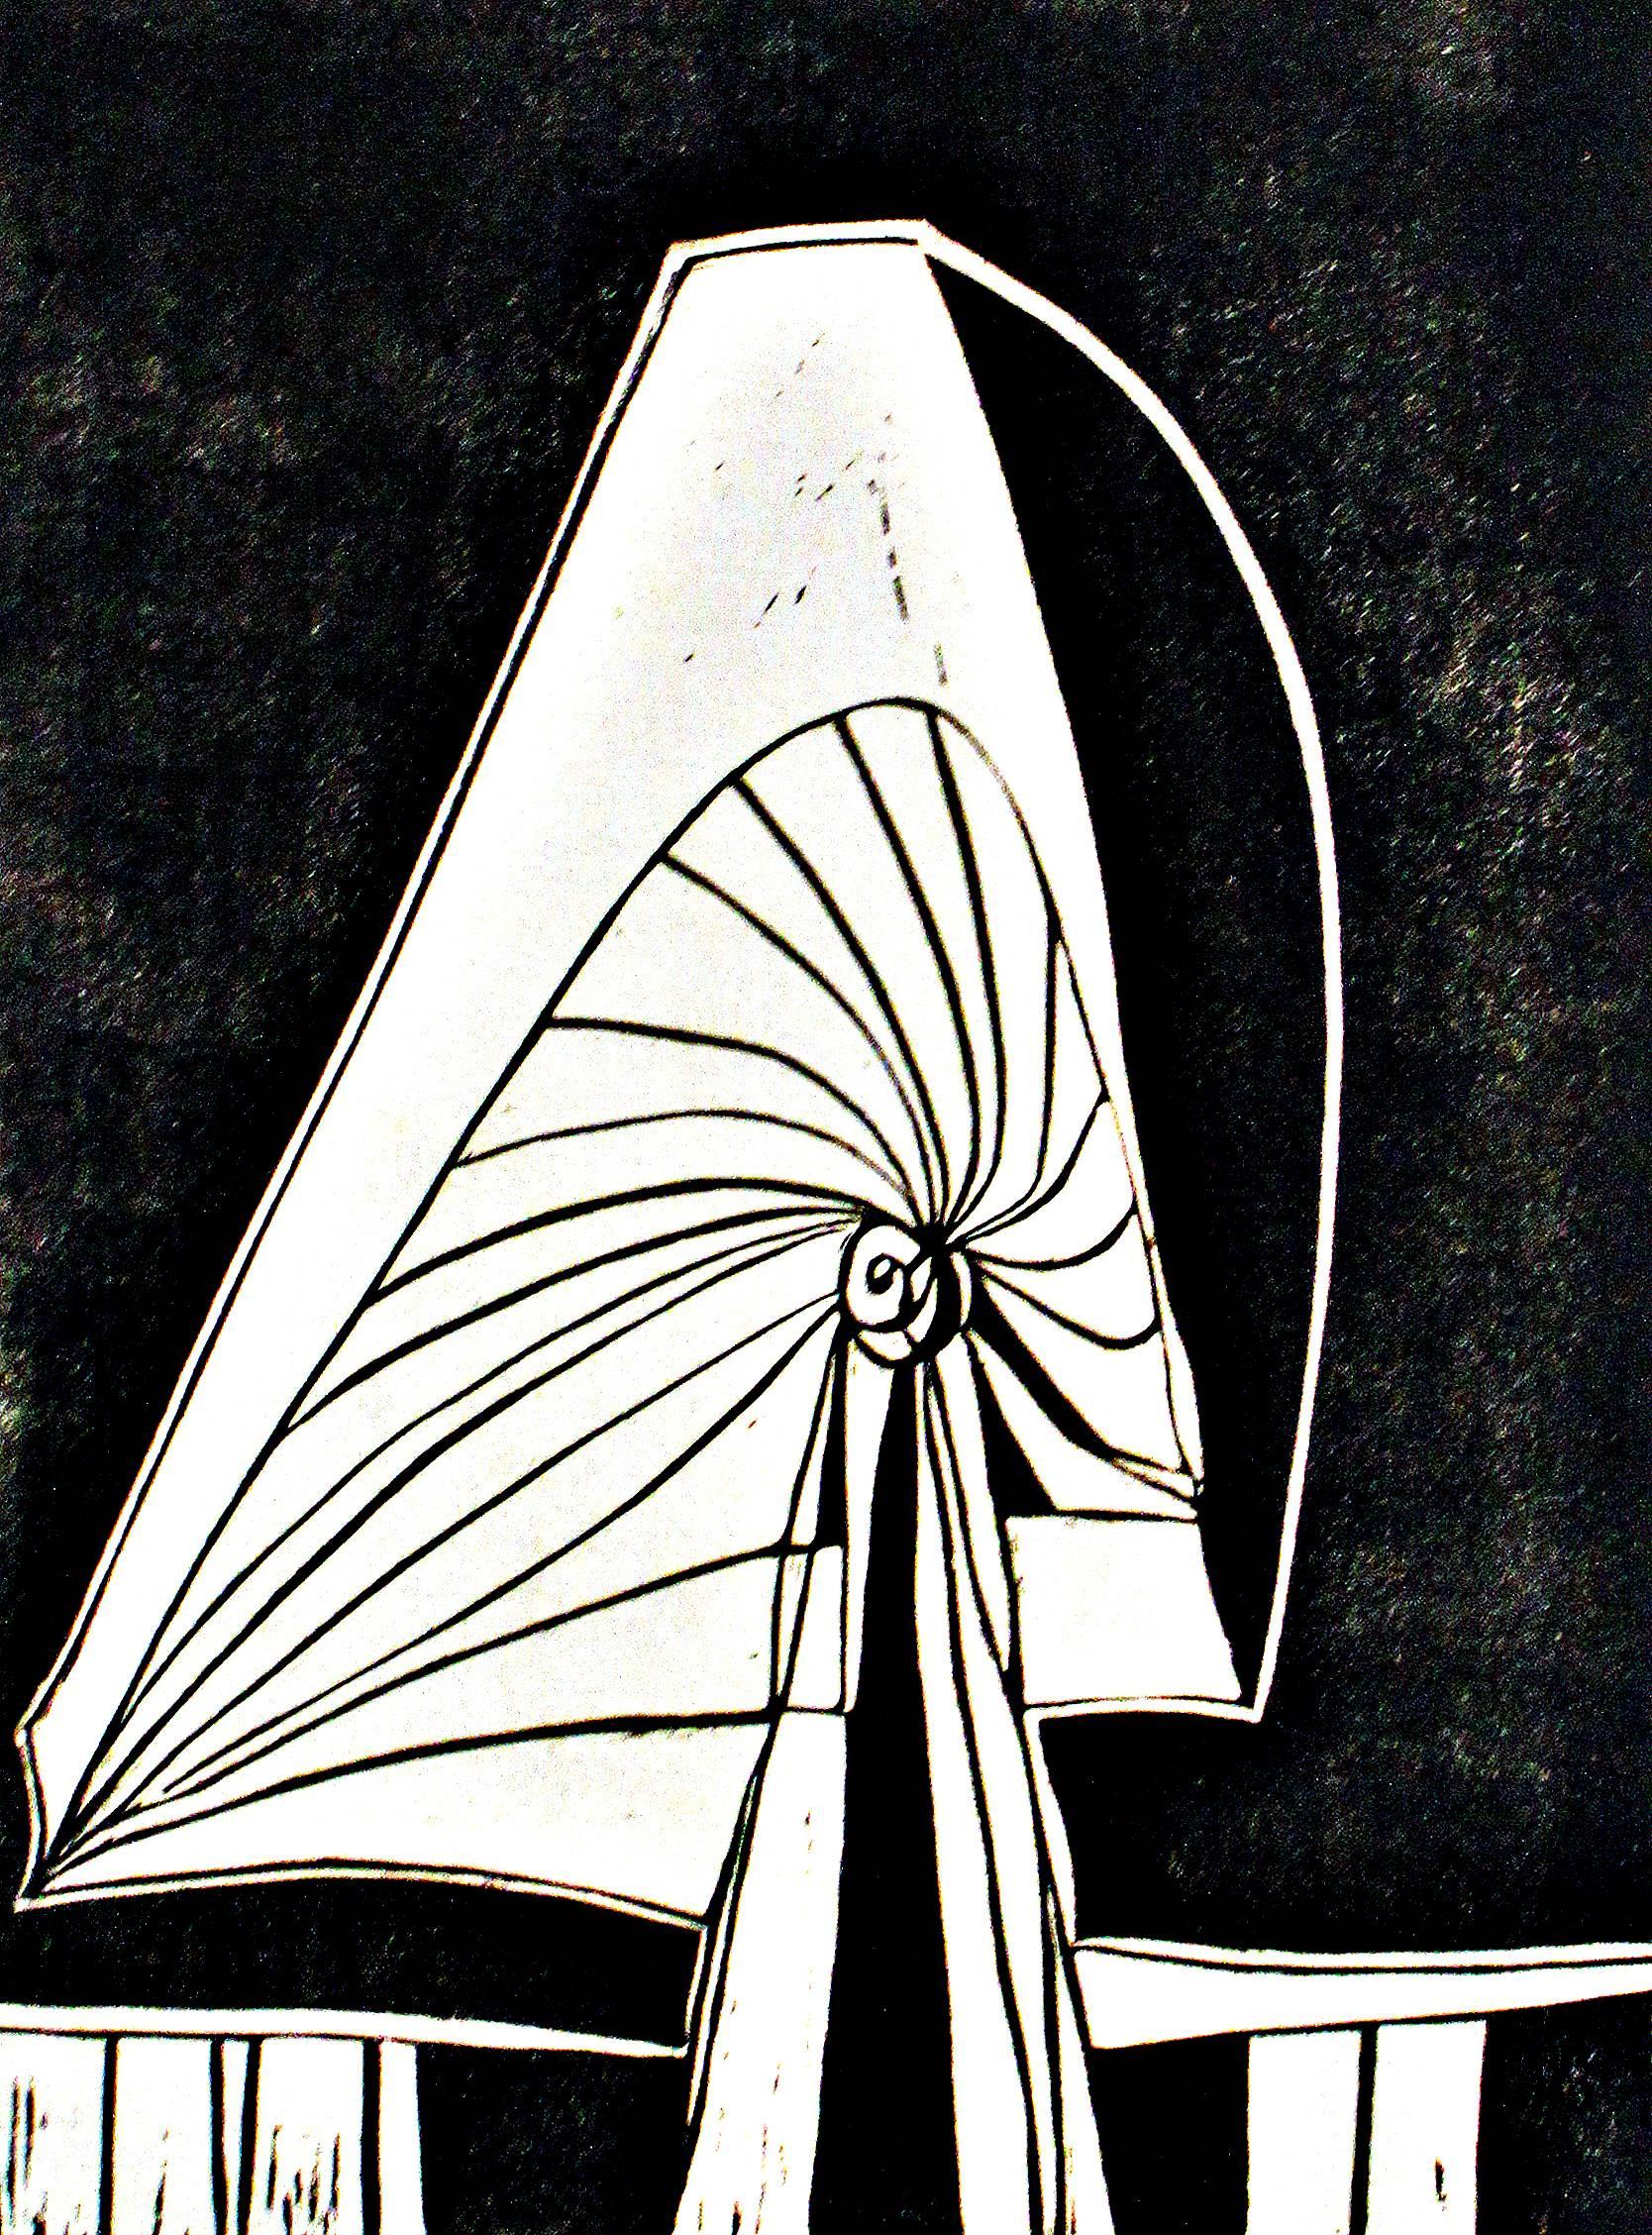 Samella Lewis Figurative Print - Heritage I, black and white woodcut print with mushroom-like shape 